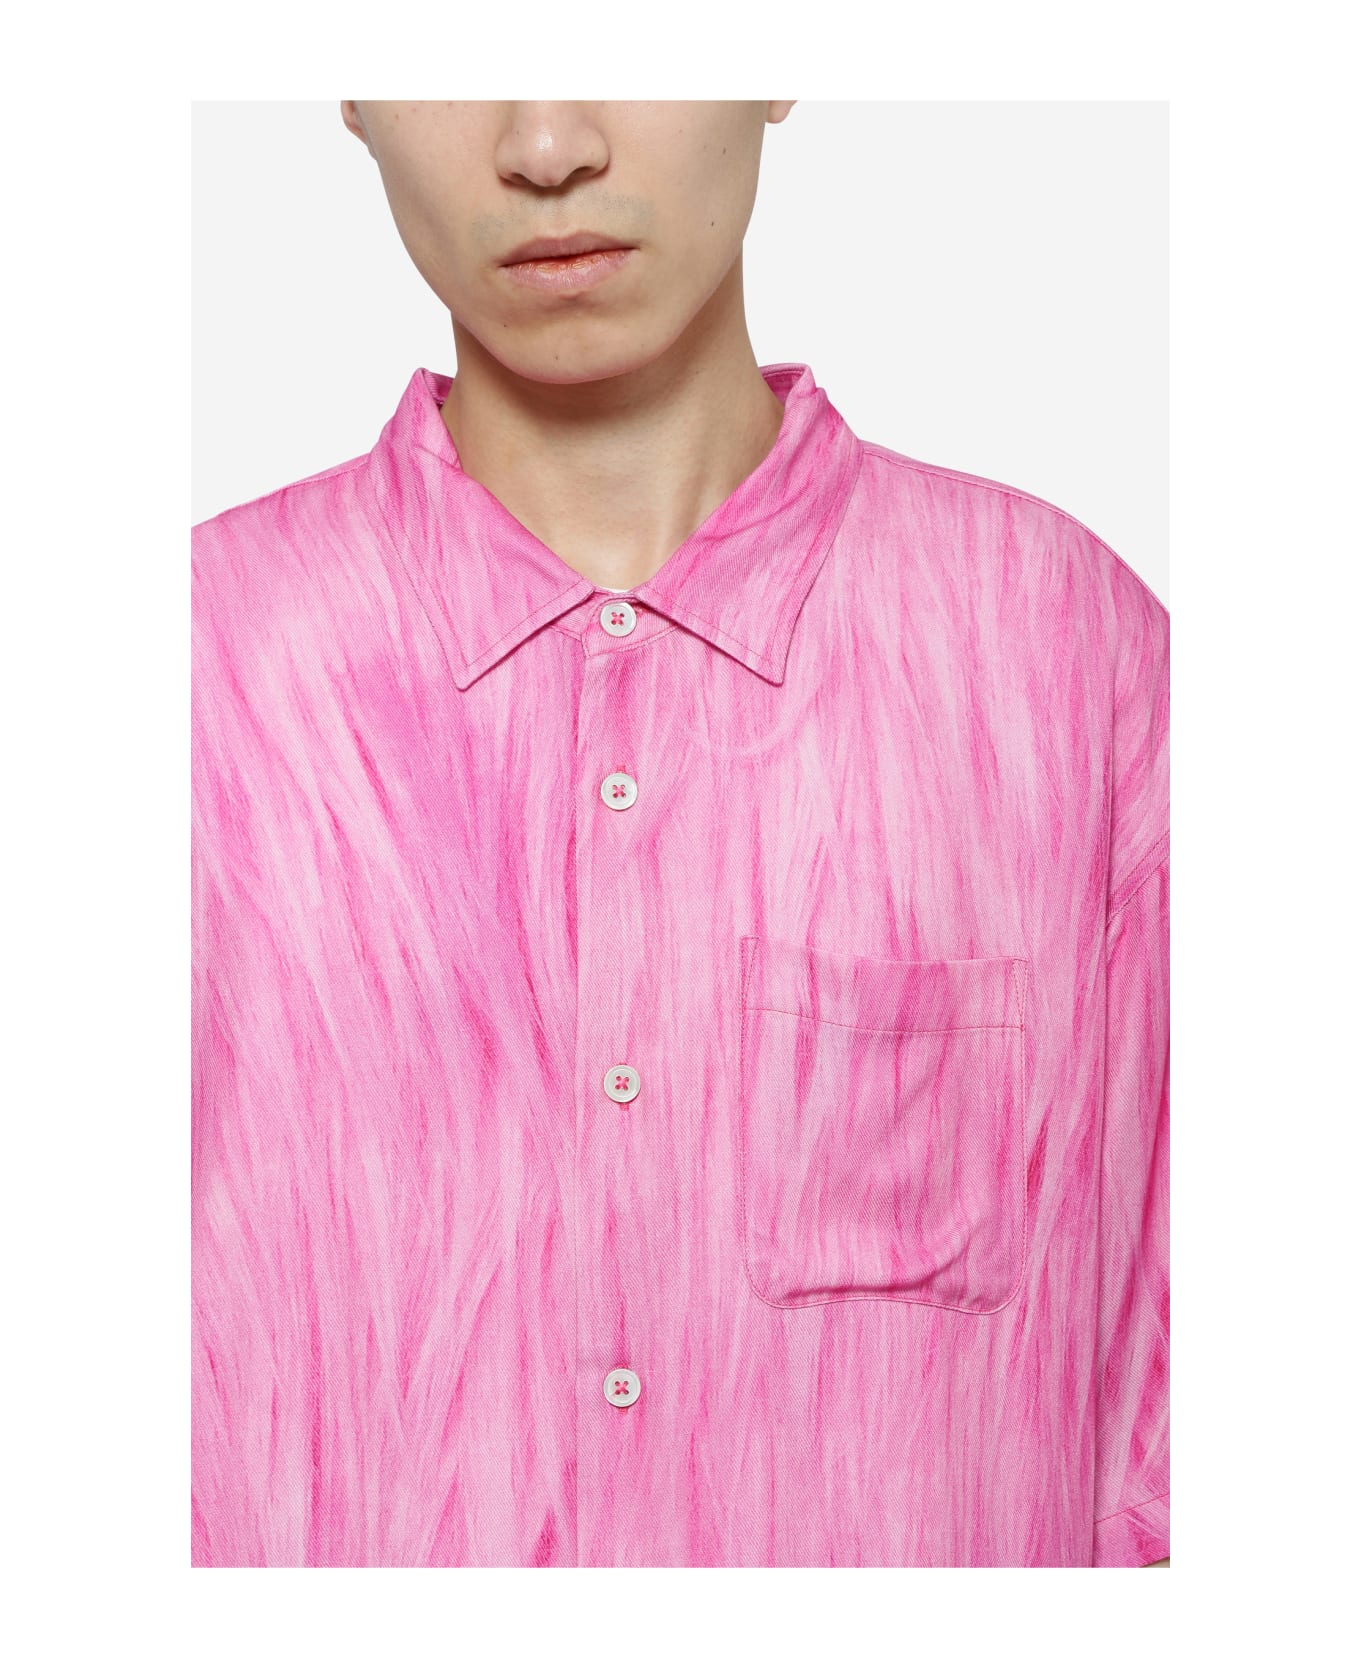 Stussy Fur Print Shirt - Pink